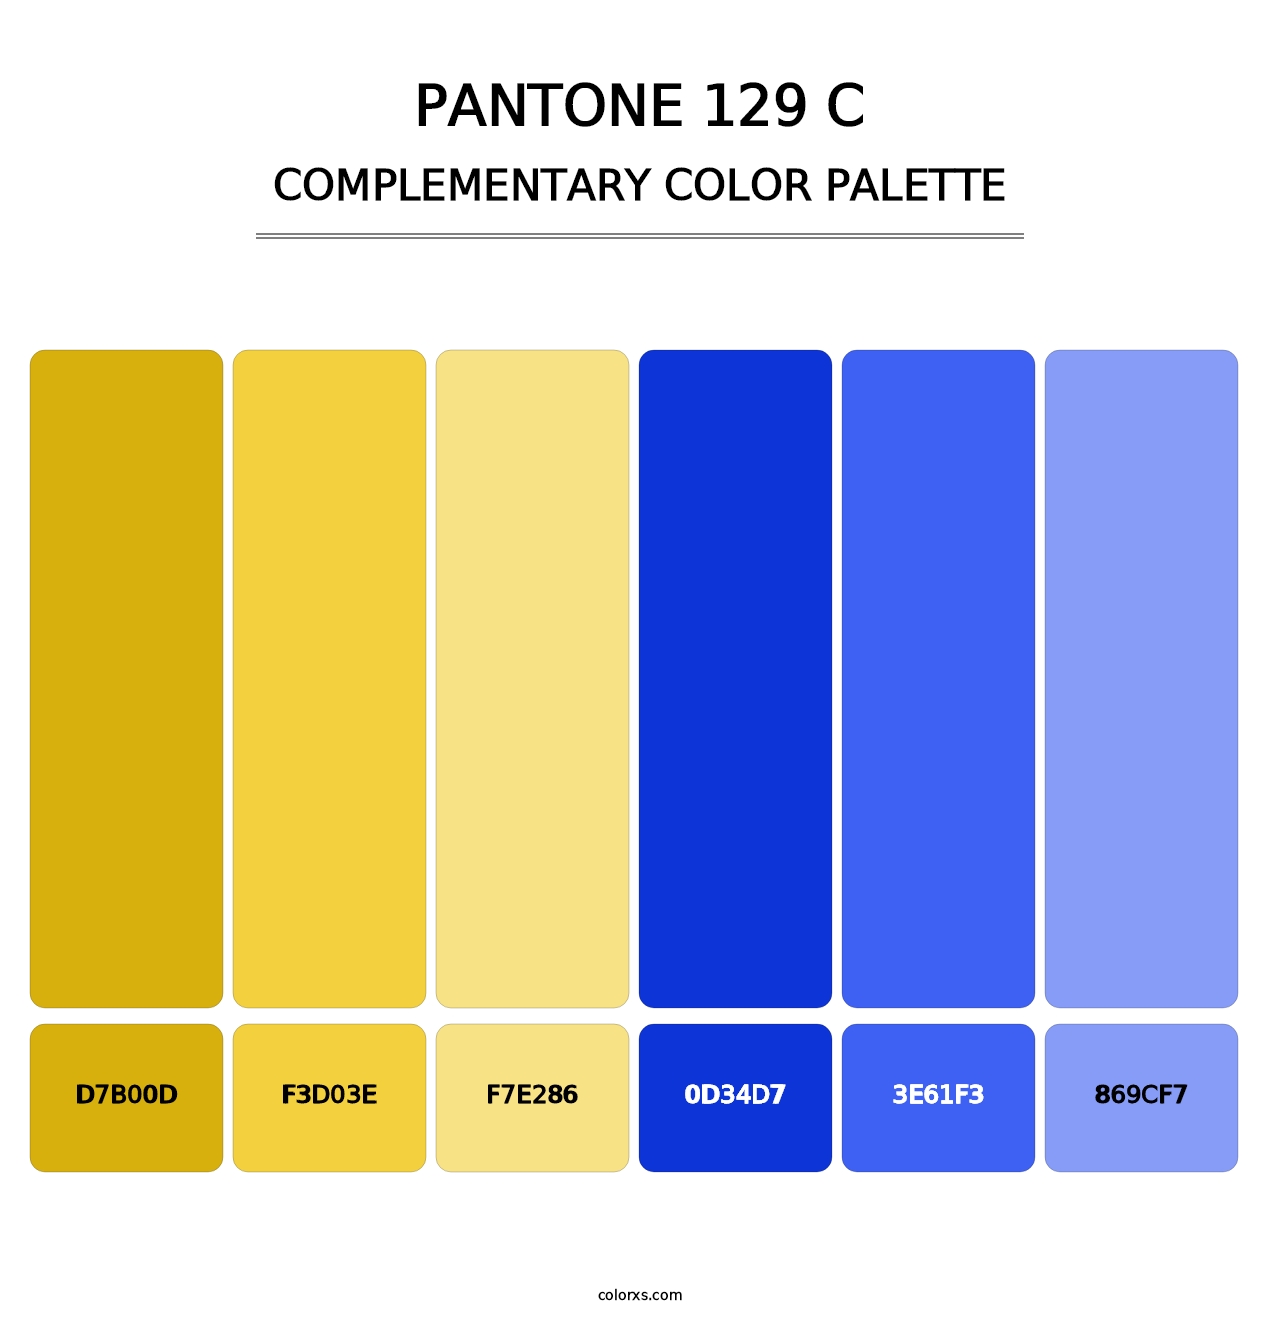 PANTONE 129 C - Complementary Color Palette